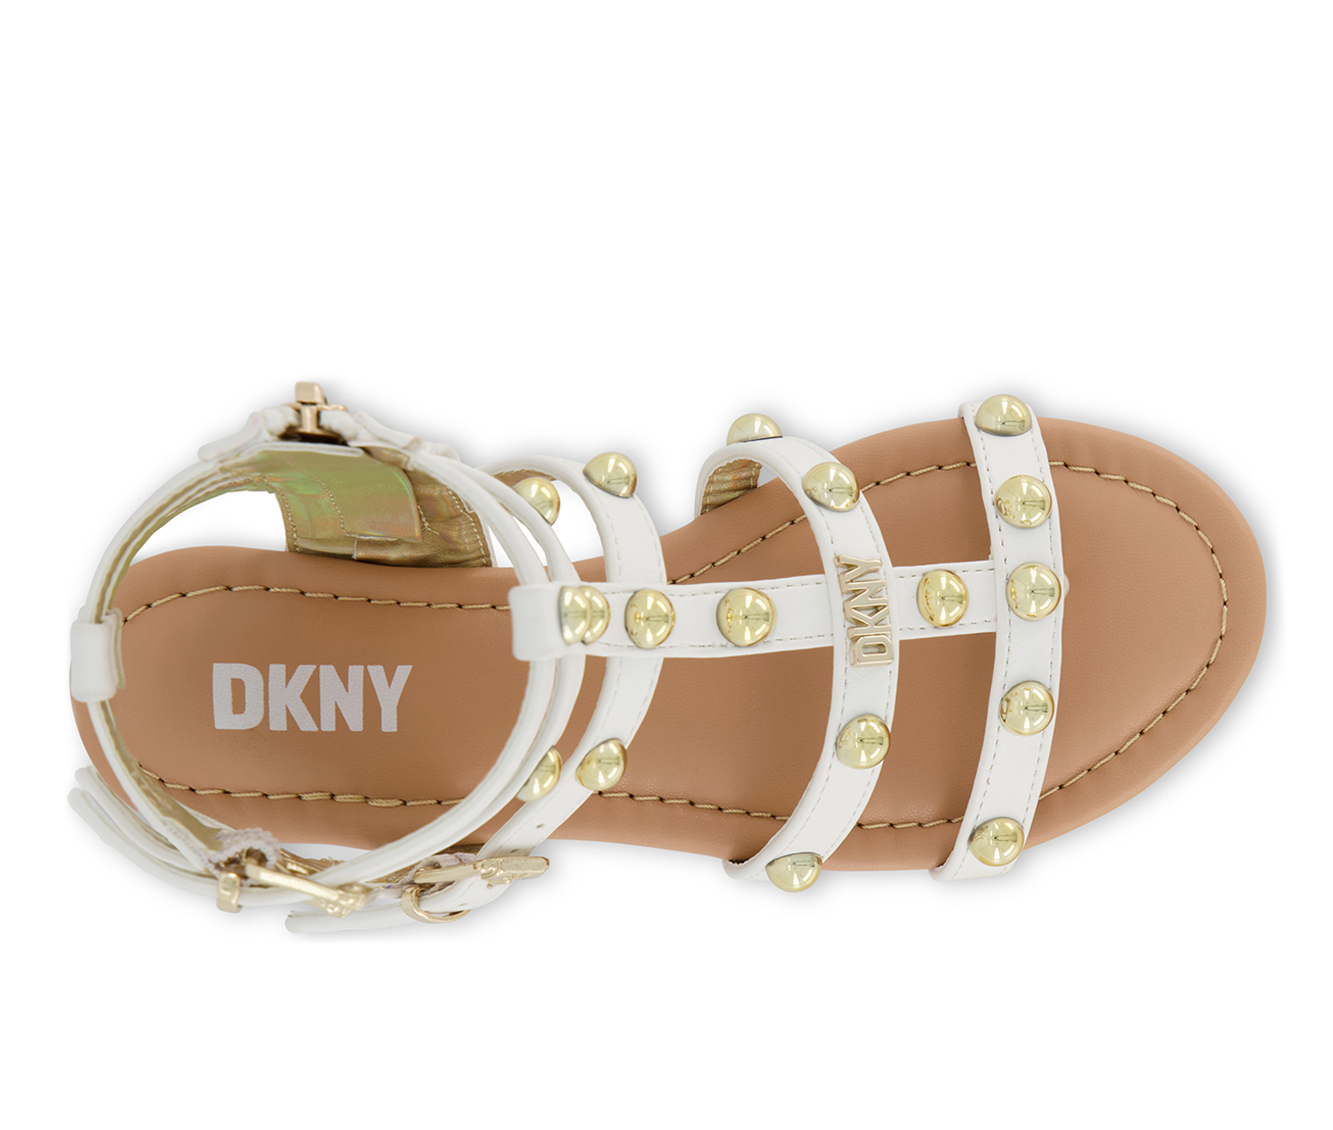 DKNY Shoes & Sandals | Shoe Carnival